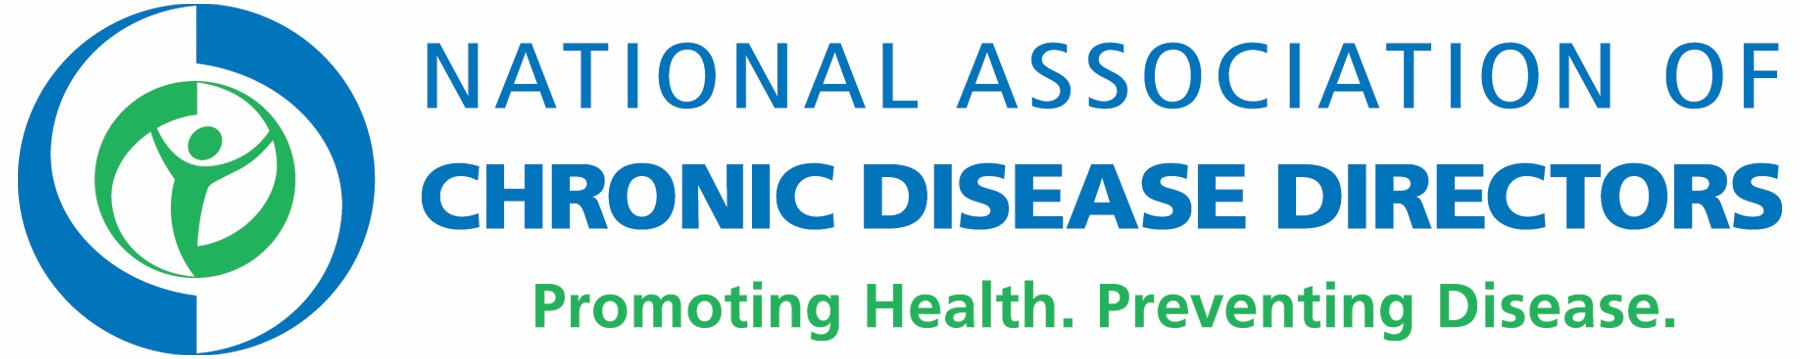 National Association of Chronic Disease Directors